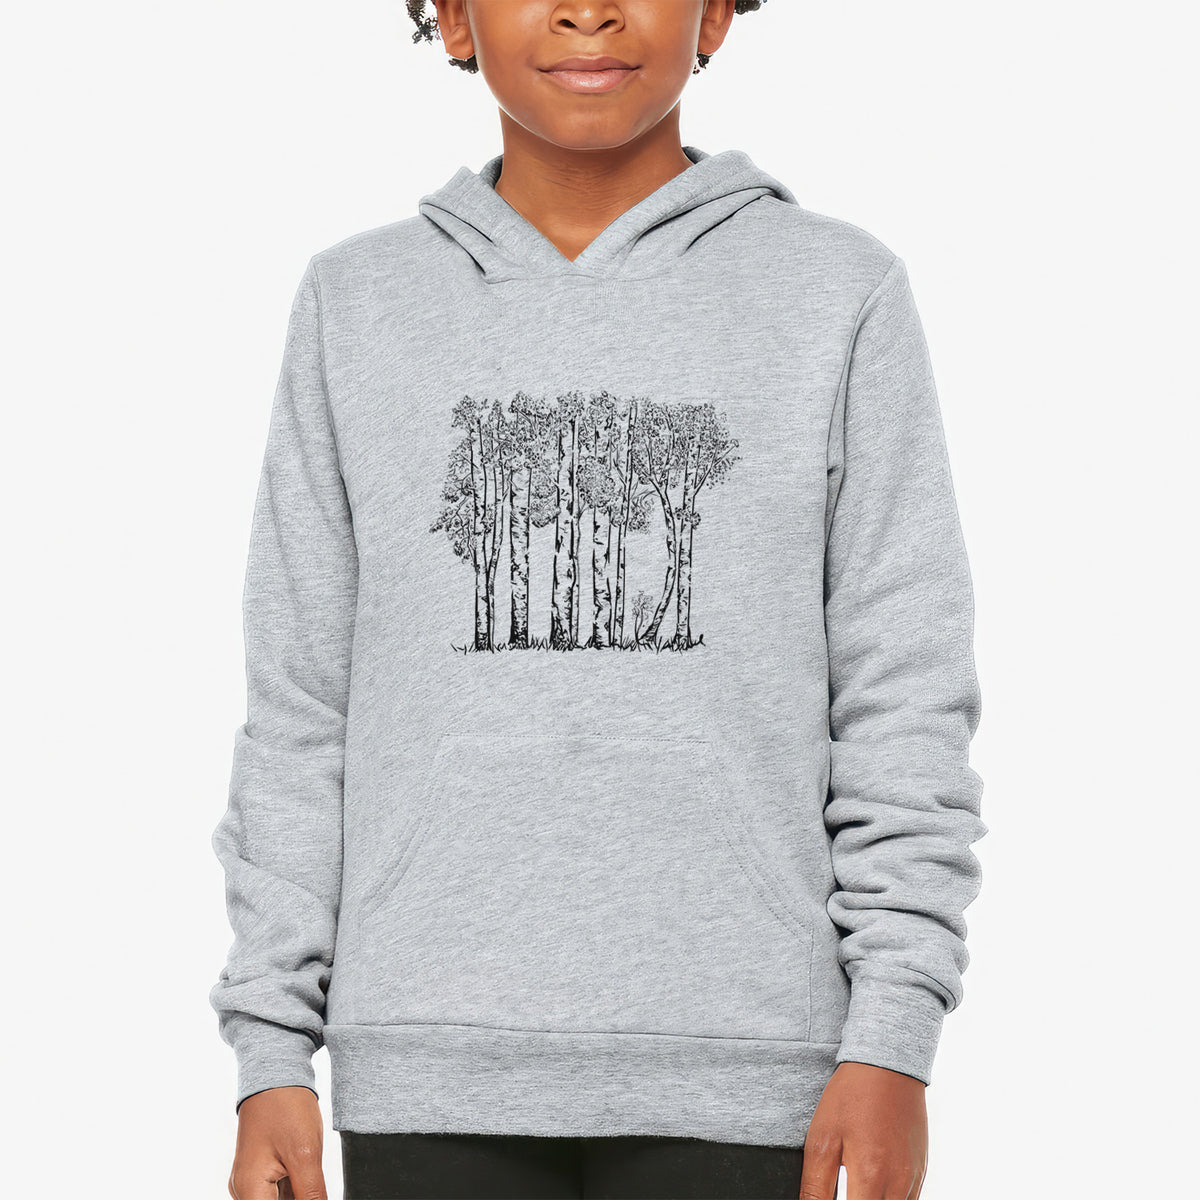 Quaking Aspens - Populus tremuloides - Youth Hoodie Sweatshirt